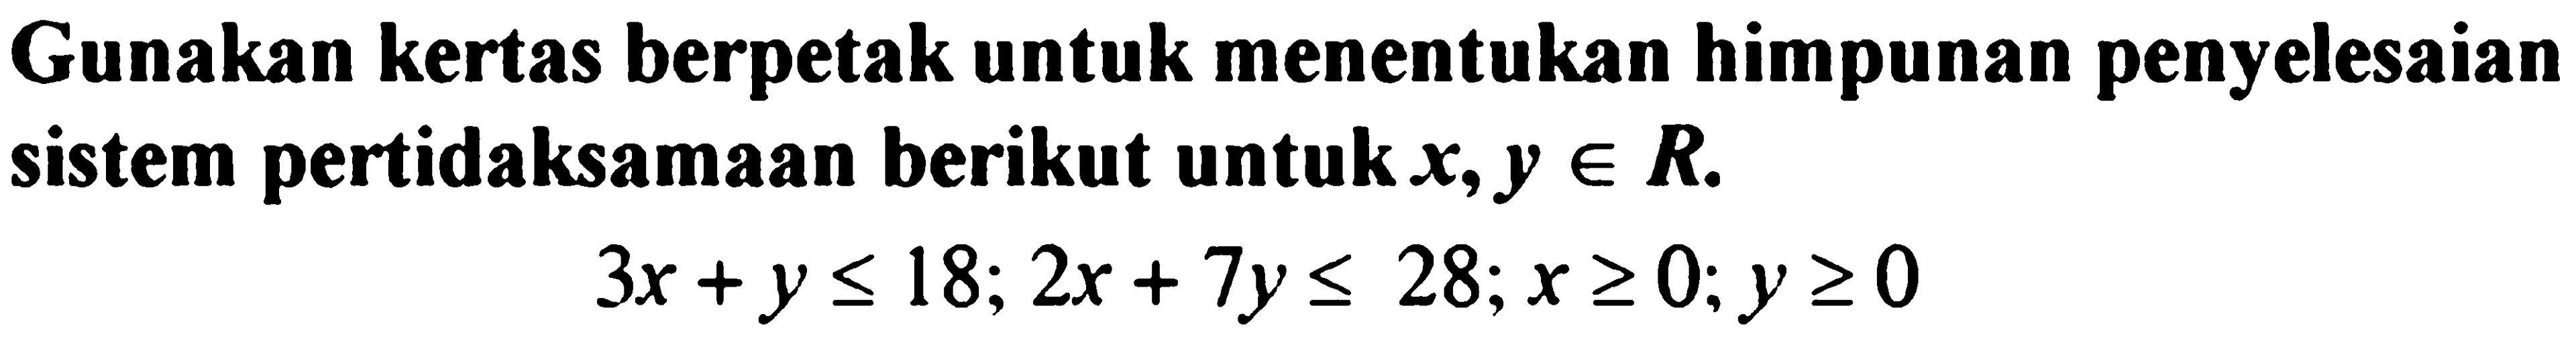 Gunakan kertas berpetak untuk menentukan himpunan penyelesaian sistem pertidaksamaan berikut untuk x,y e R. 3x+y<=18; 2x+7y<=28; x>=0; y>=0